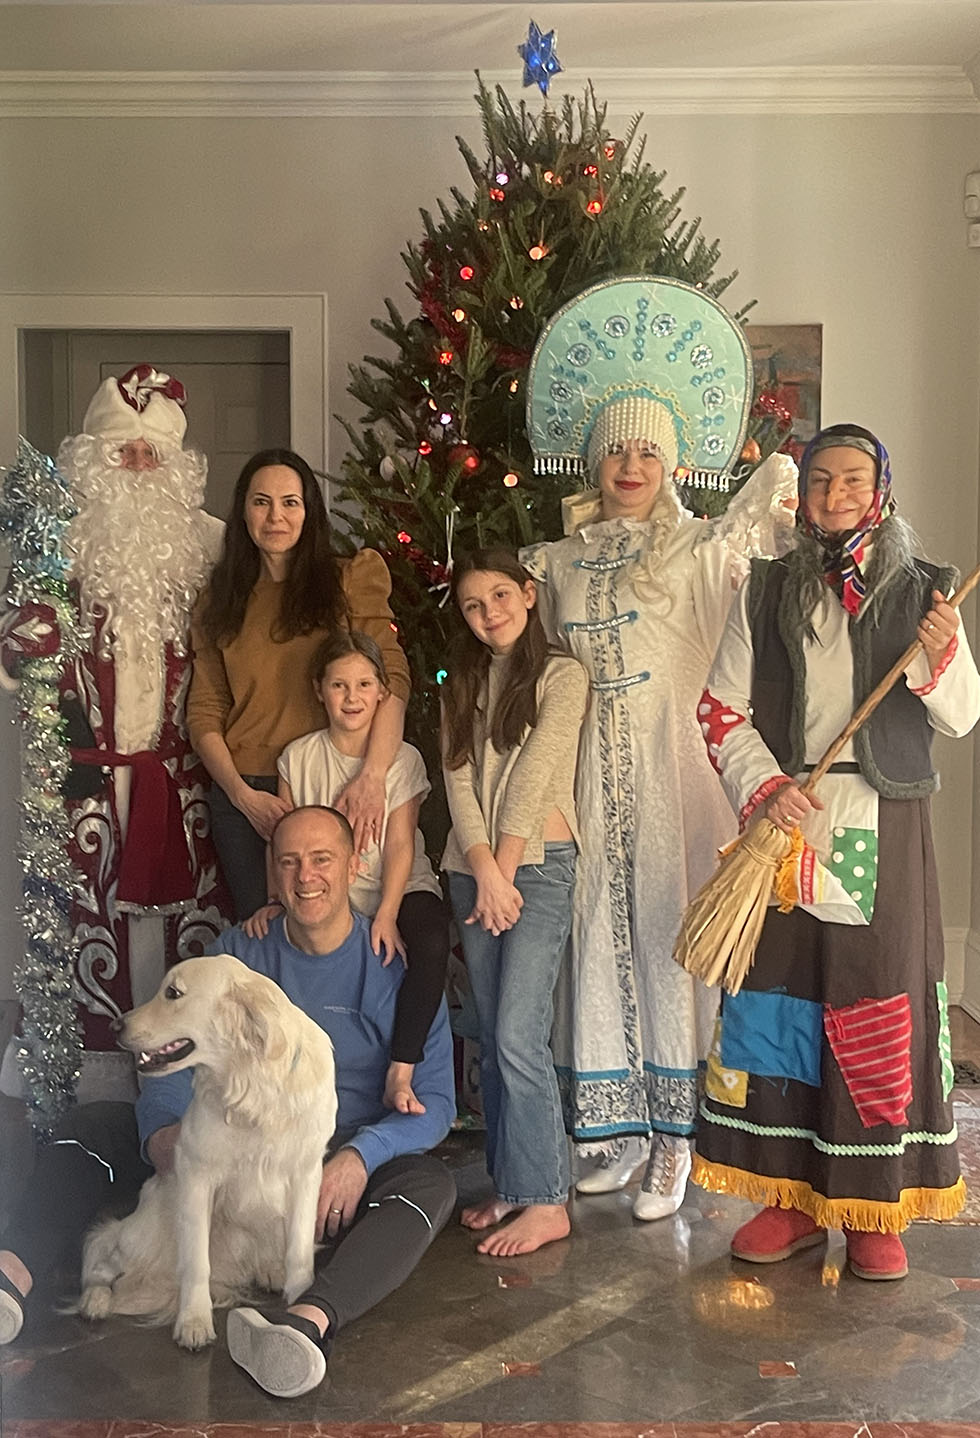     ,      ,     ,      ,  , ,  ,    , Ded Moroz Show in Connecticut, Ded Moroz, Snegurochka, Baba Yaga, Greenwich, Connecticut